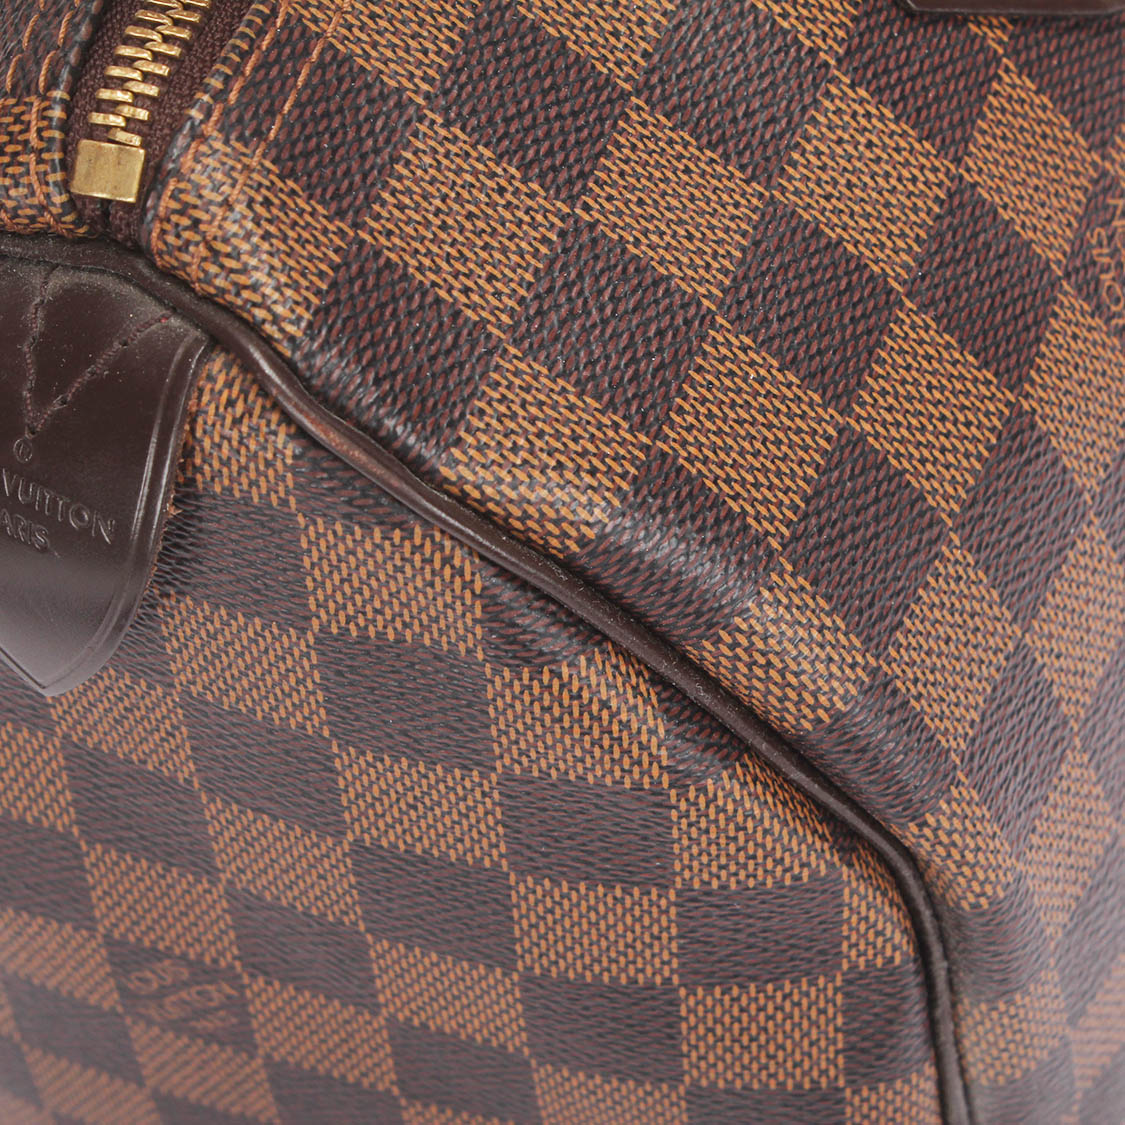 Authentic Louis Vuitton Damier Ebene Speedy 30 Top Handle Satchel Handbag  N41364